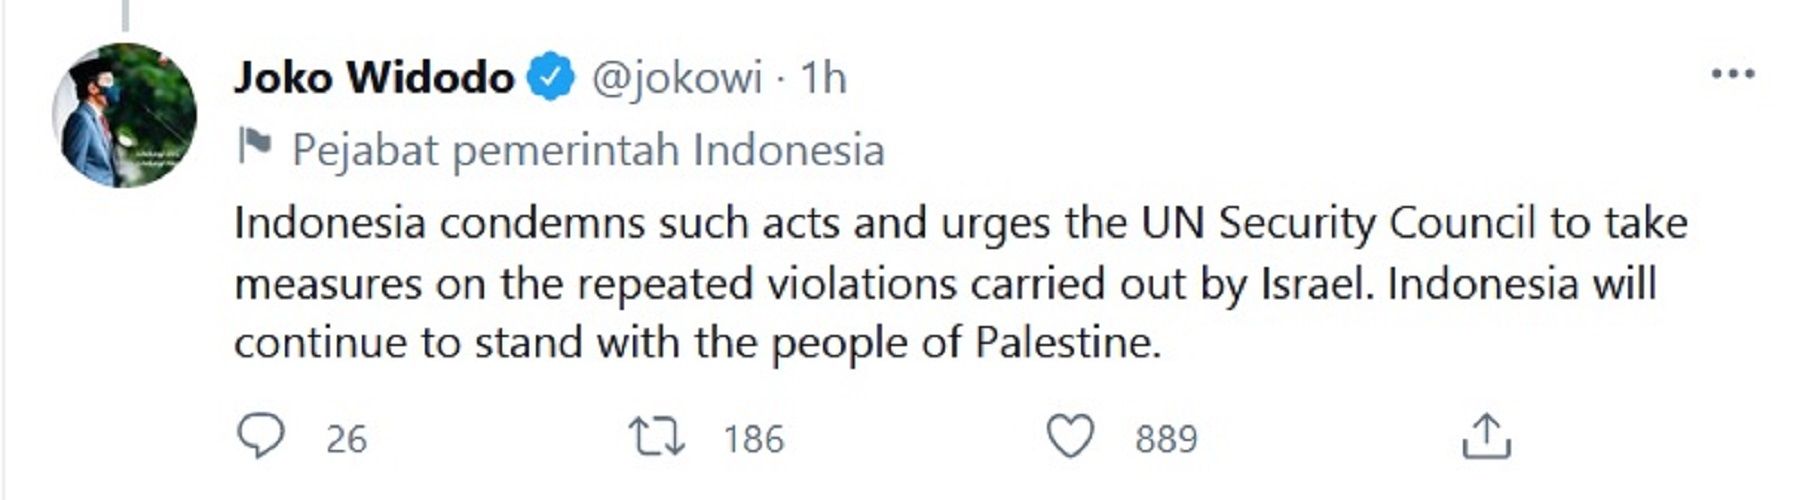 Kutuk Tindakan Israel, Jokowi Desak Dewan Keamanan PBB untuk Pelanggaran yang Dilakukan pada Warga Palestina